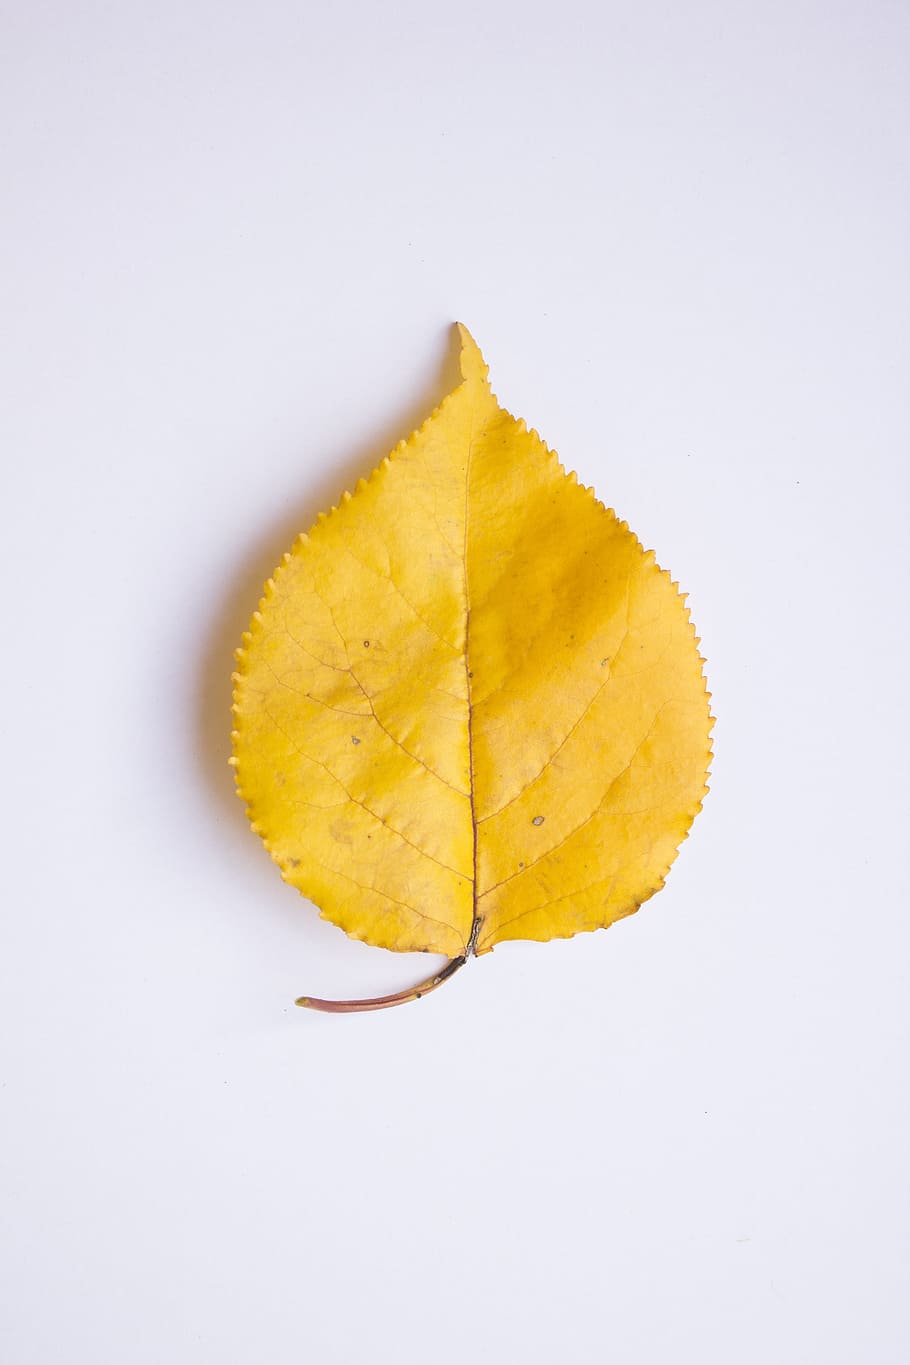 Leaf, Autumn, Colors, Yellow, autumn, colors, white background, single object, studio shot, plant part, indoors